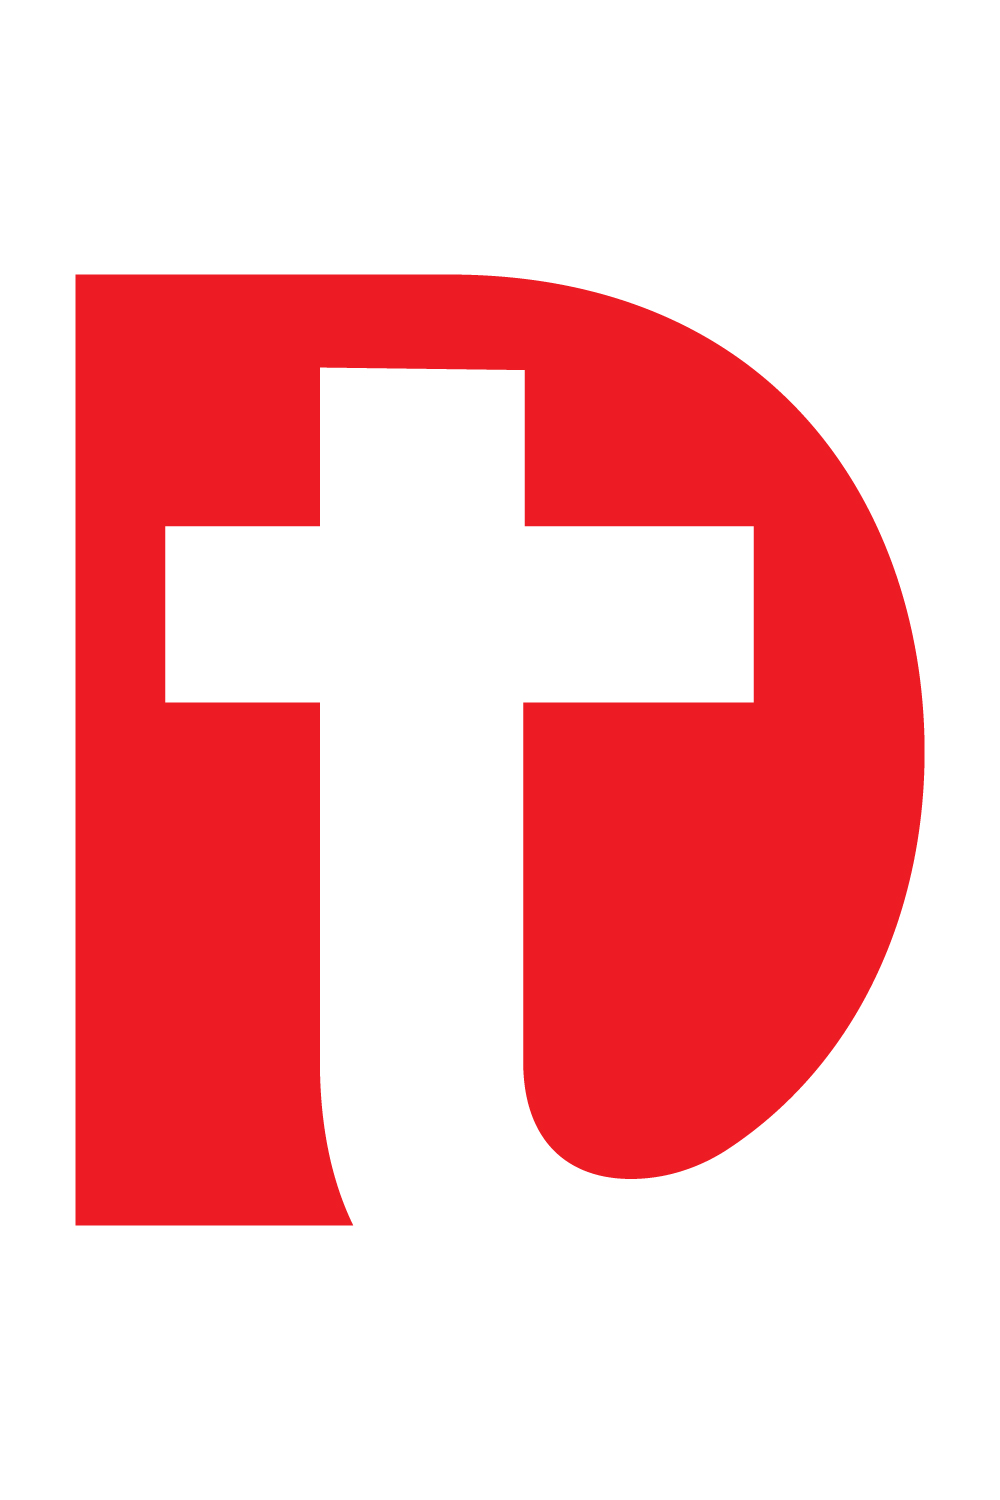 DT Medical Logo design for your brand pinterest preview image.